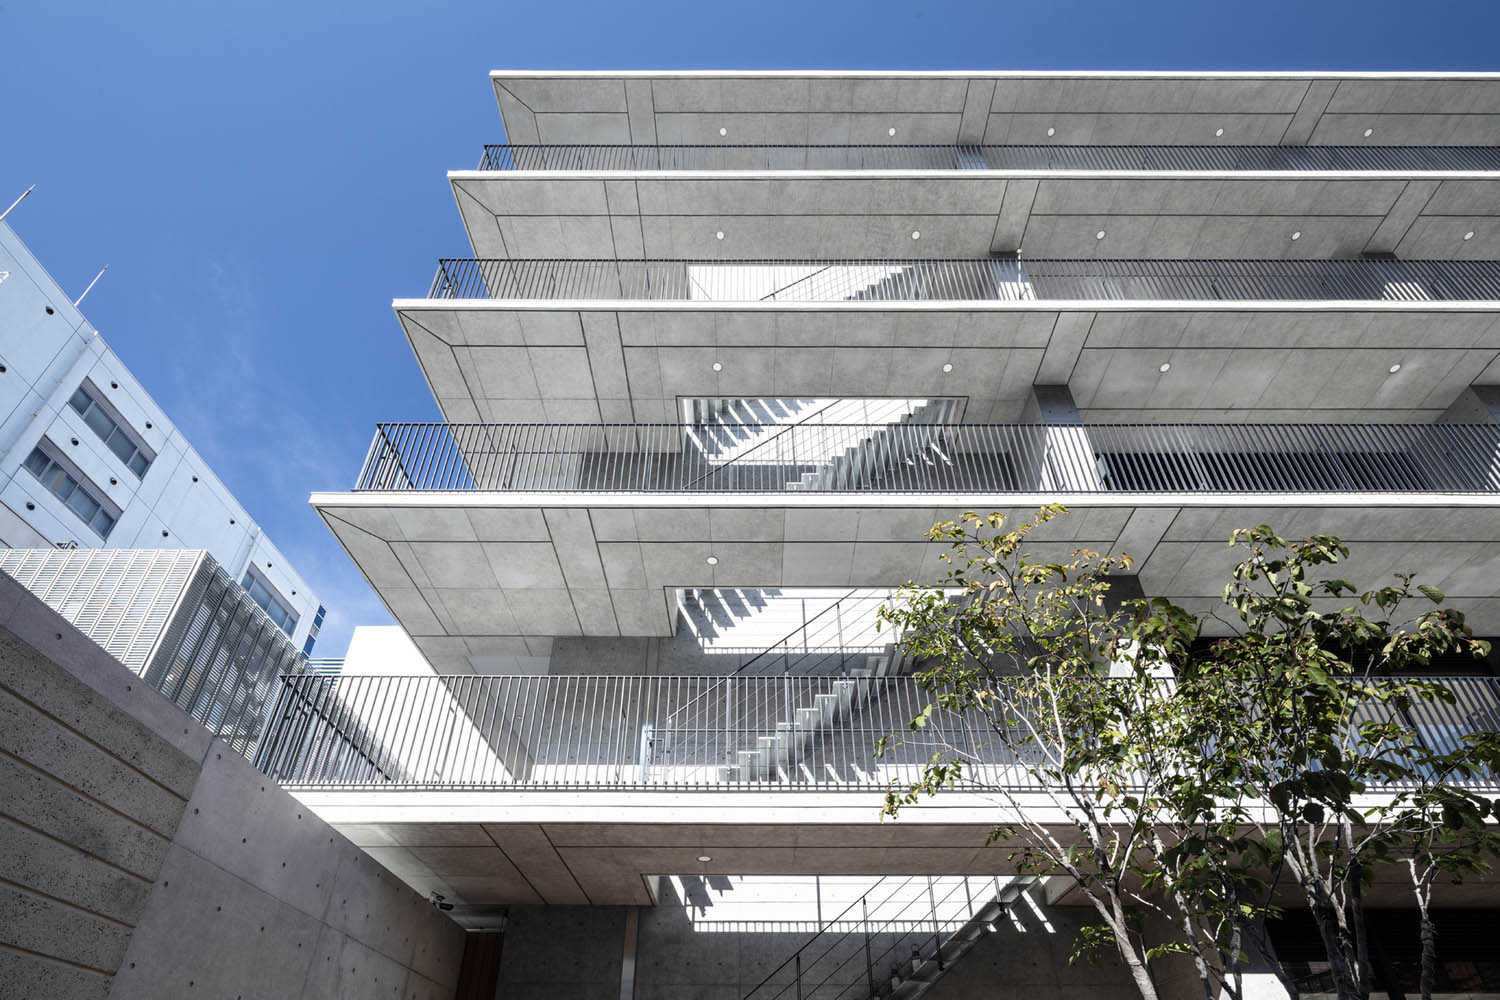 广岛安徒生商业大厦,建筑设计,TAISEI DESIGN Planners Architects & Engineers,建筑改造,商业空间设计,多功能复合空间设计,日本,Hiroshima Andersen Commercial Building